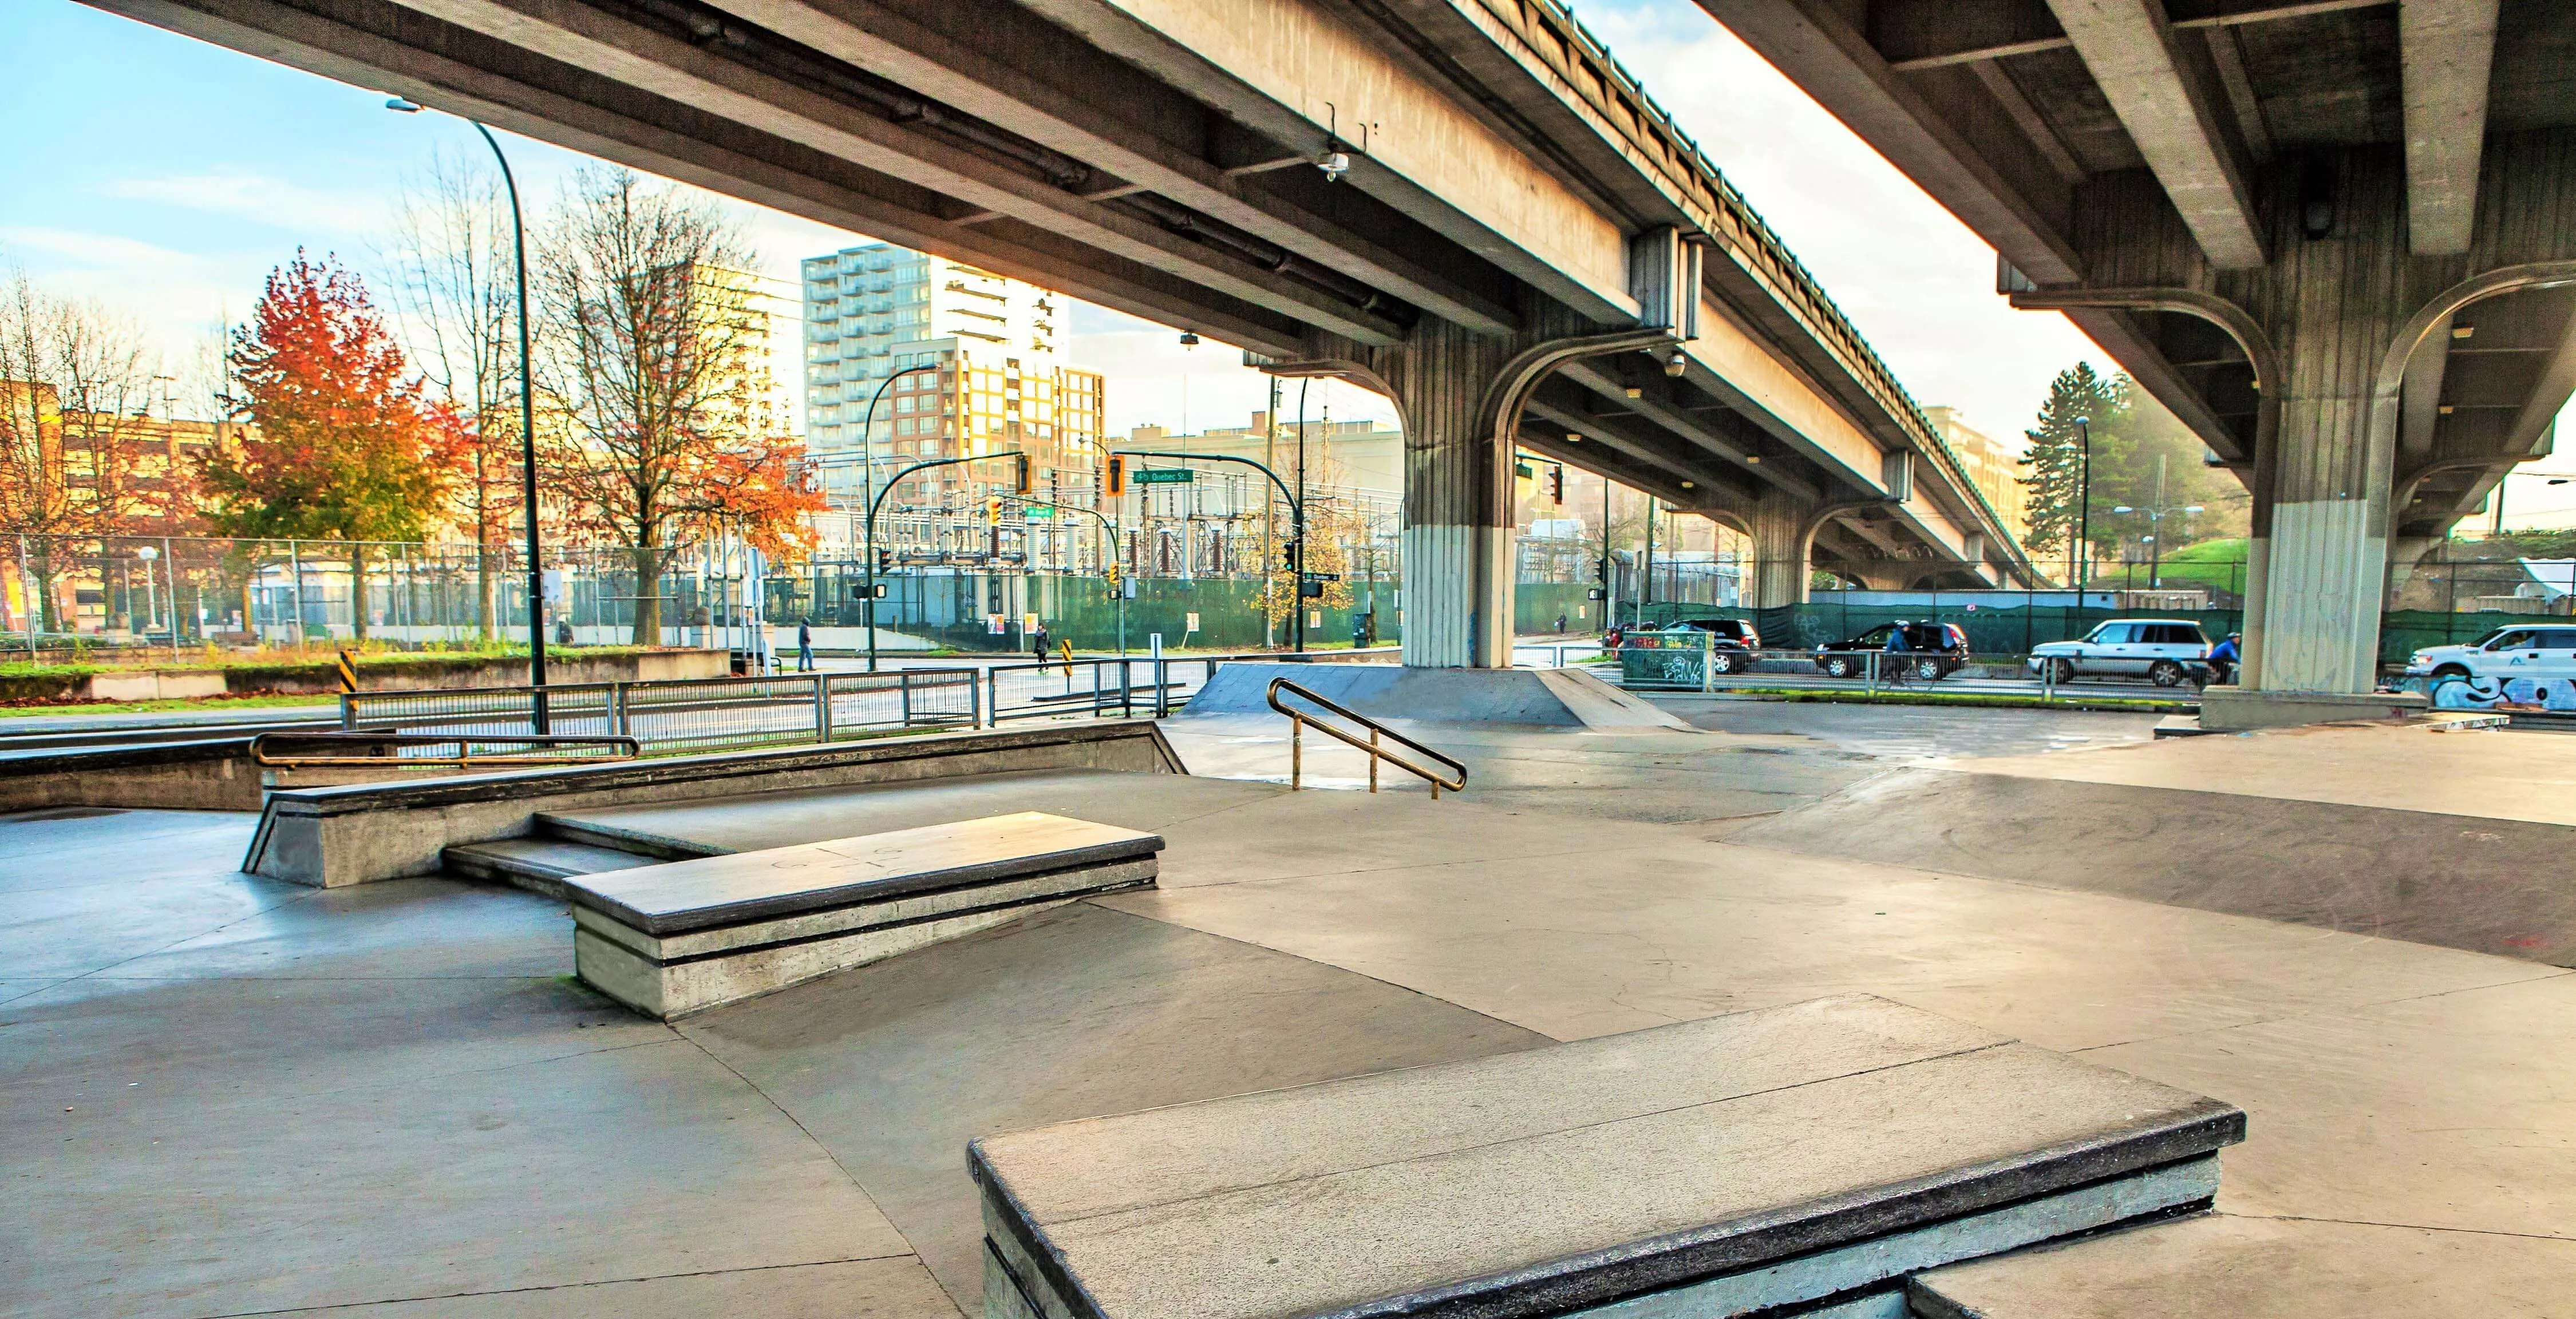 The Plaza Skateboard Park in Canada, North America | Skateboarding - Rated 0.8